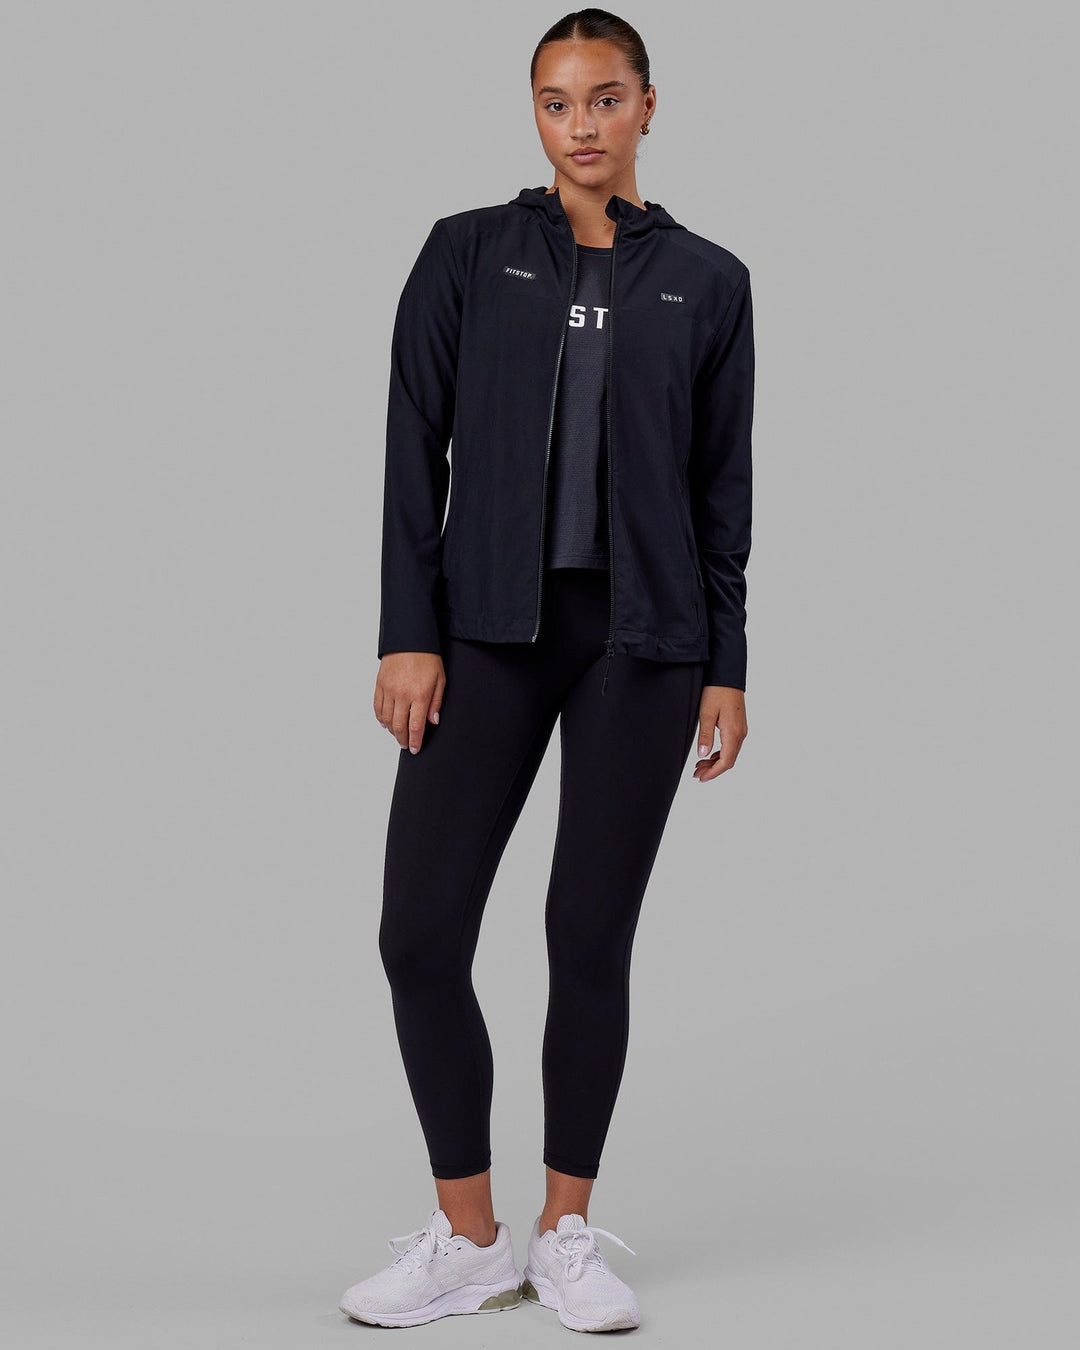 Woman wearing Fitstop Womens Functional Training Jacket - Black